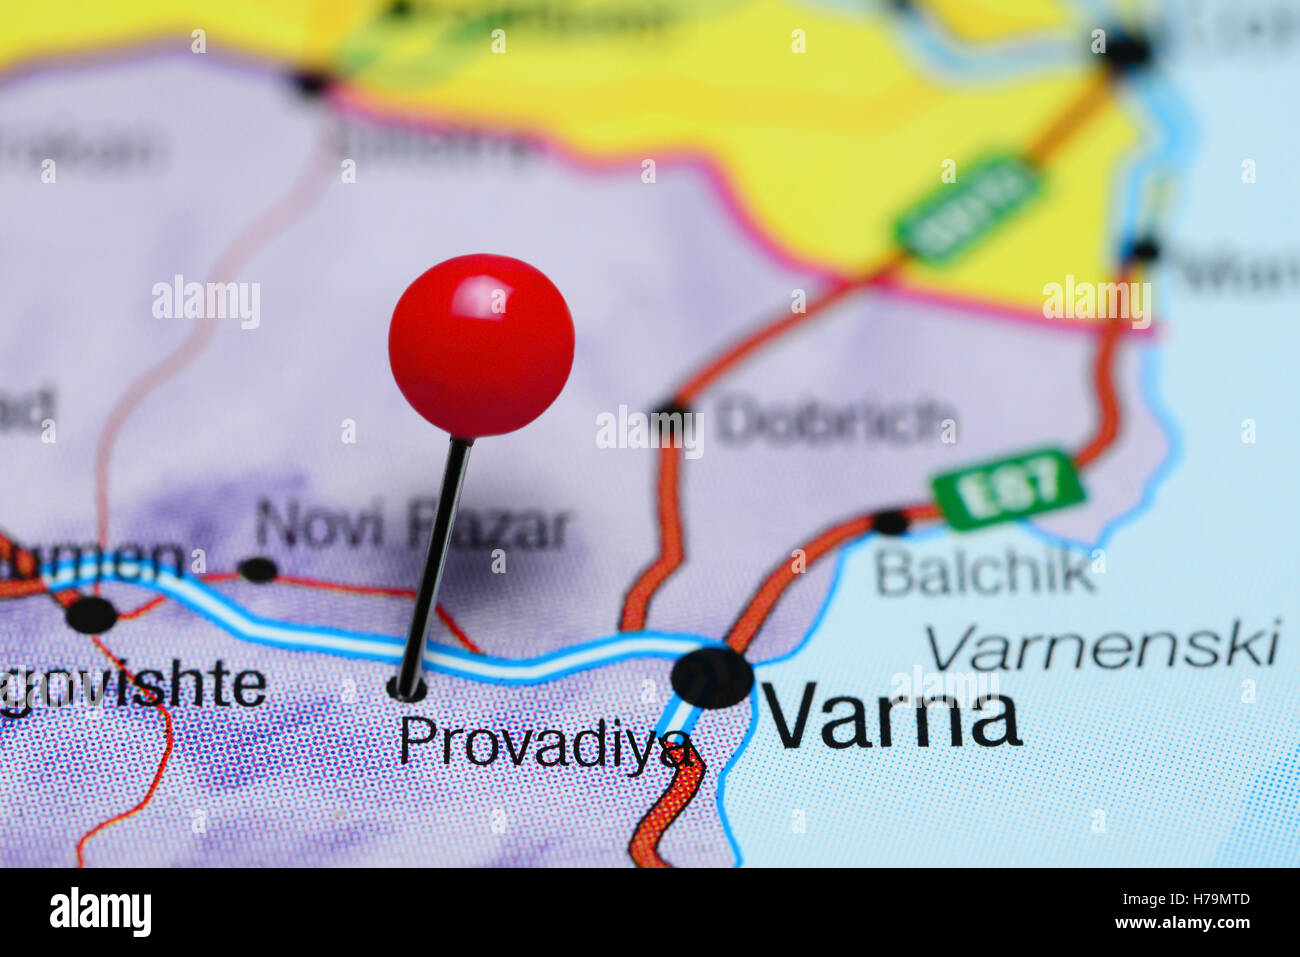 Provadiya pinned on a map of Bulgaria Stock Photo